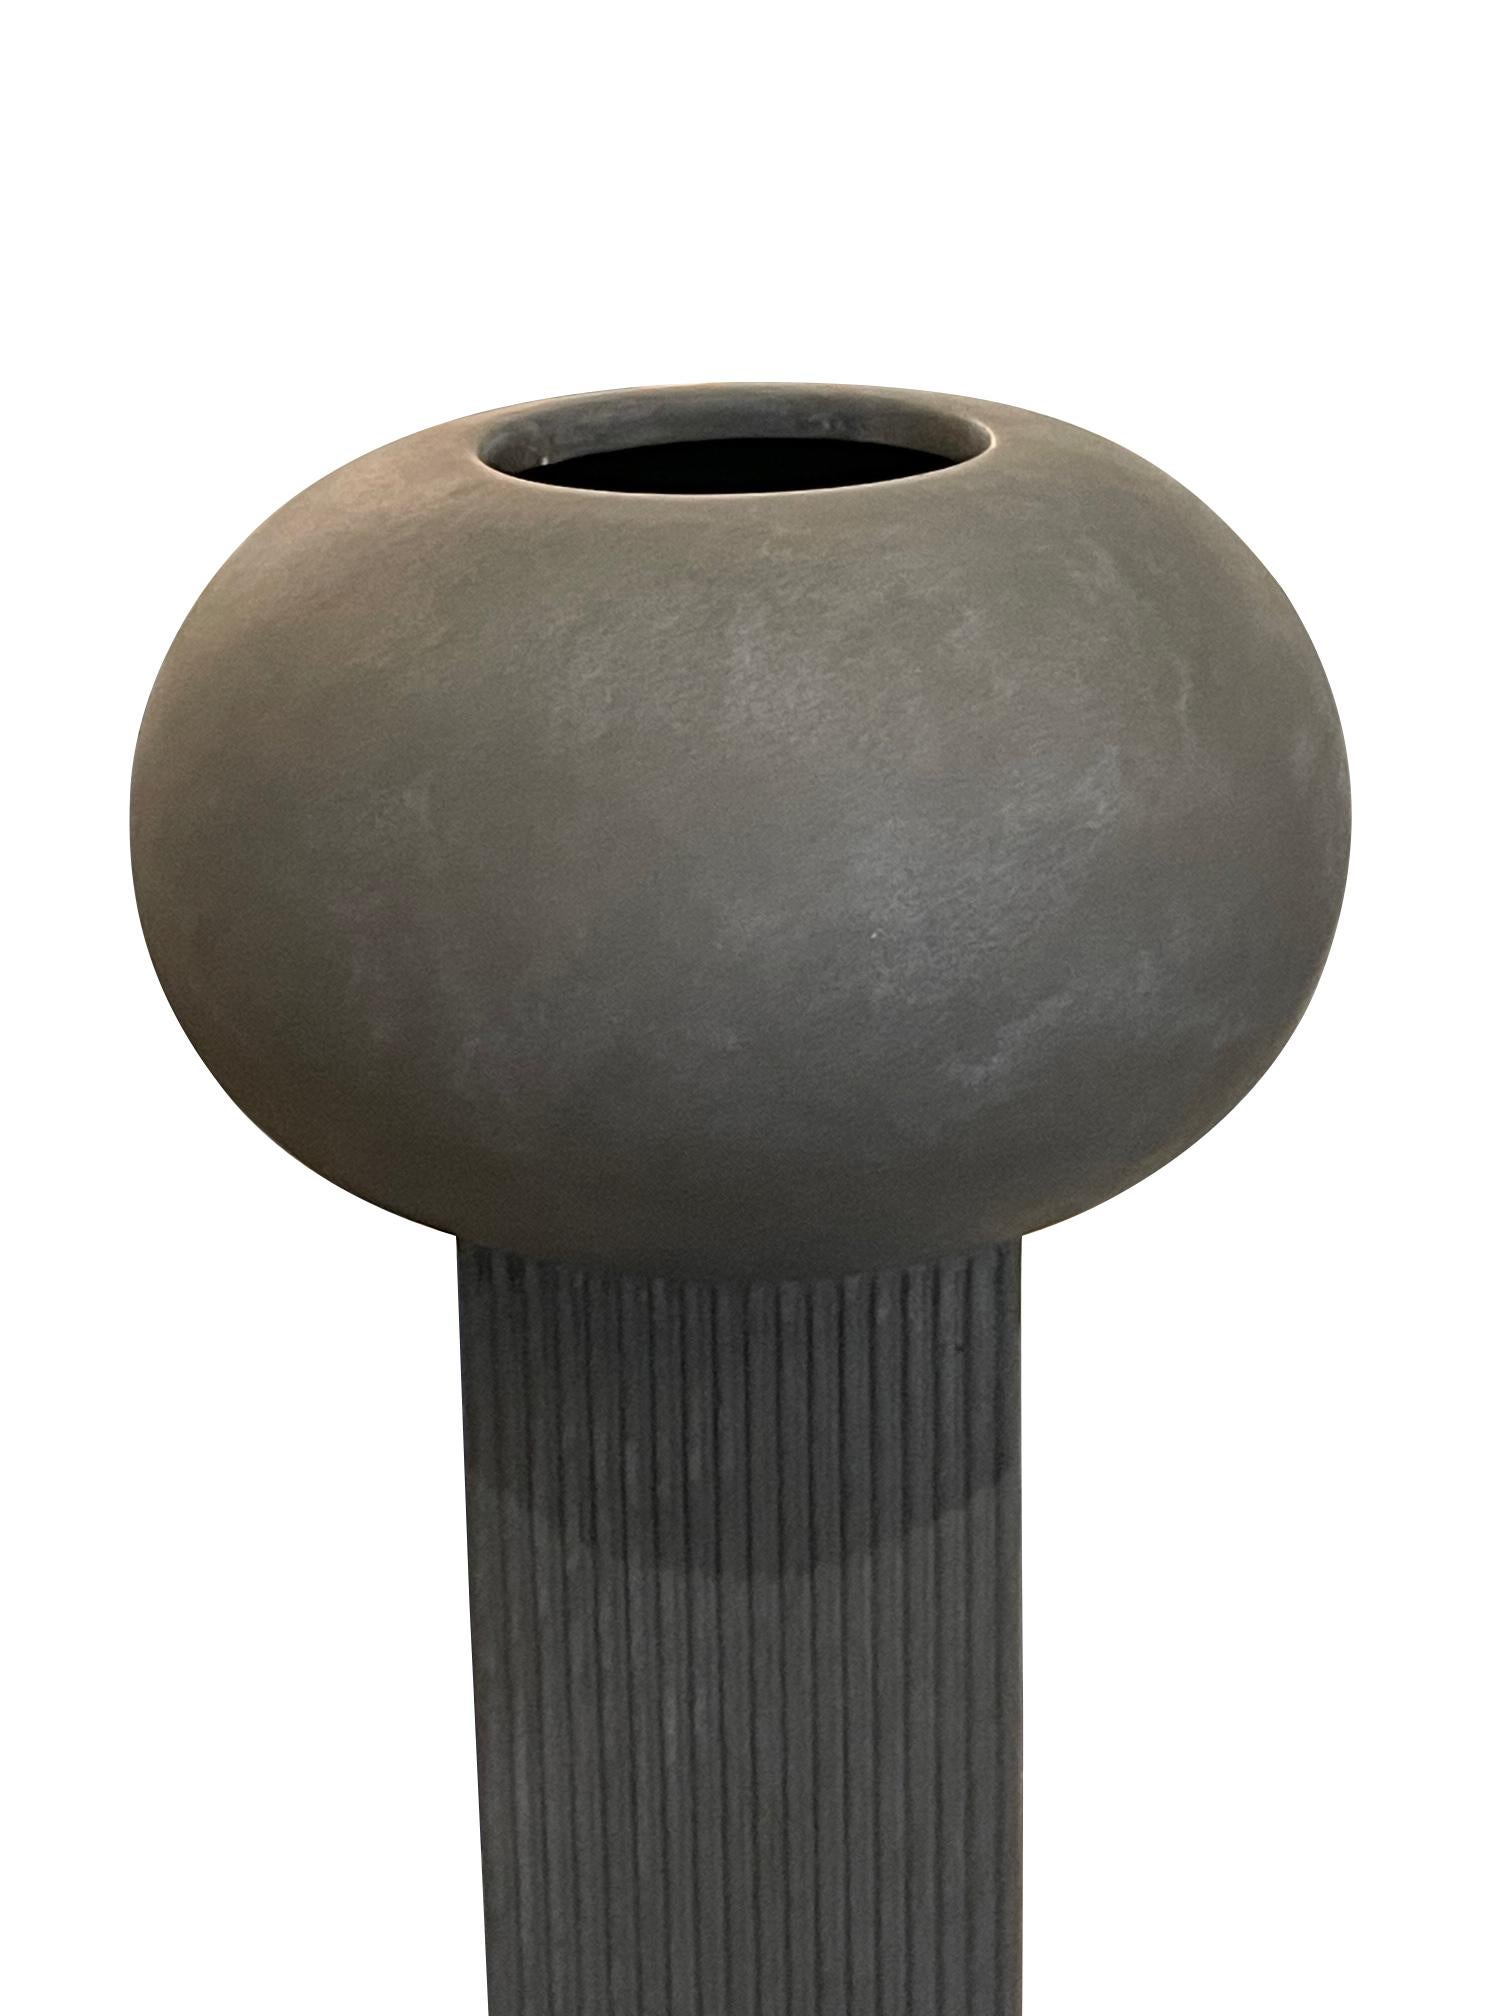 Ceramic Grey Ribbed Column With Globe Top Large Danish Design Vase, Contemporary